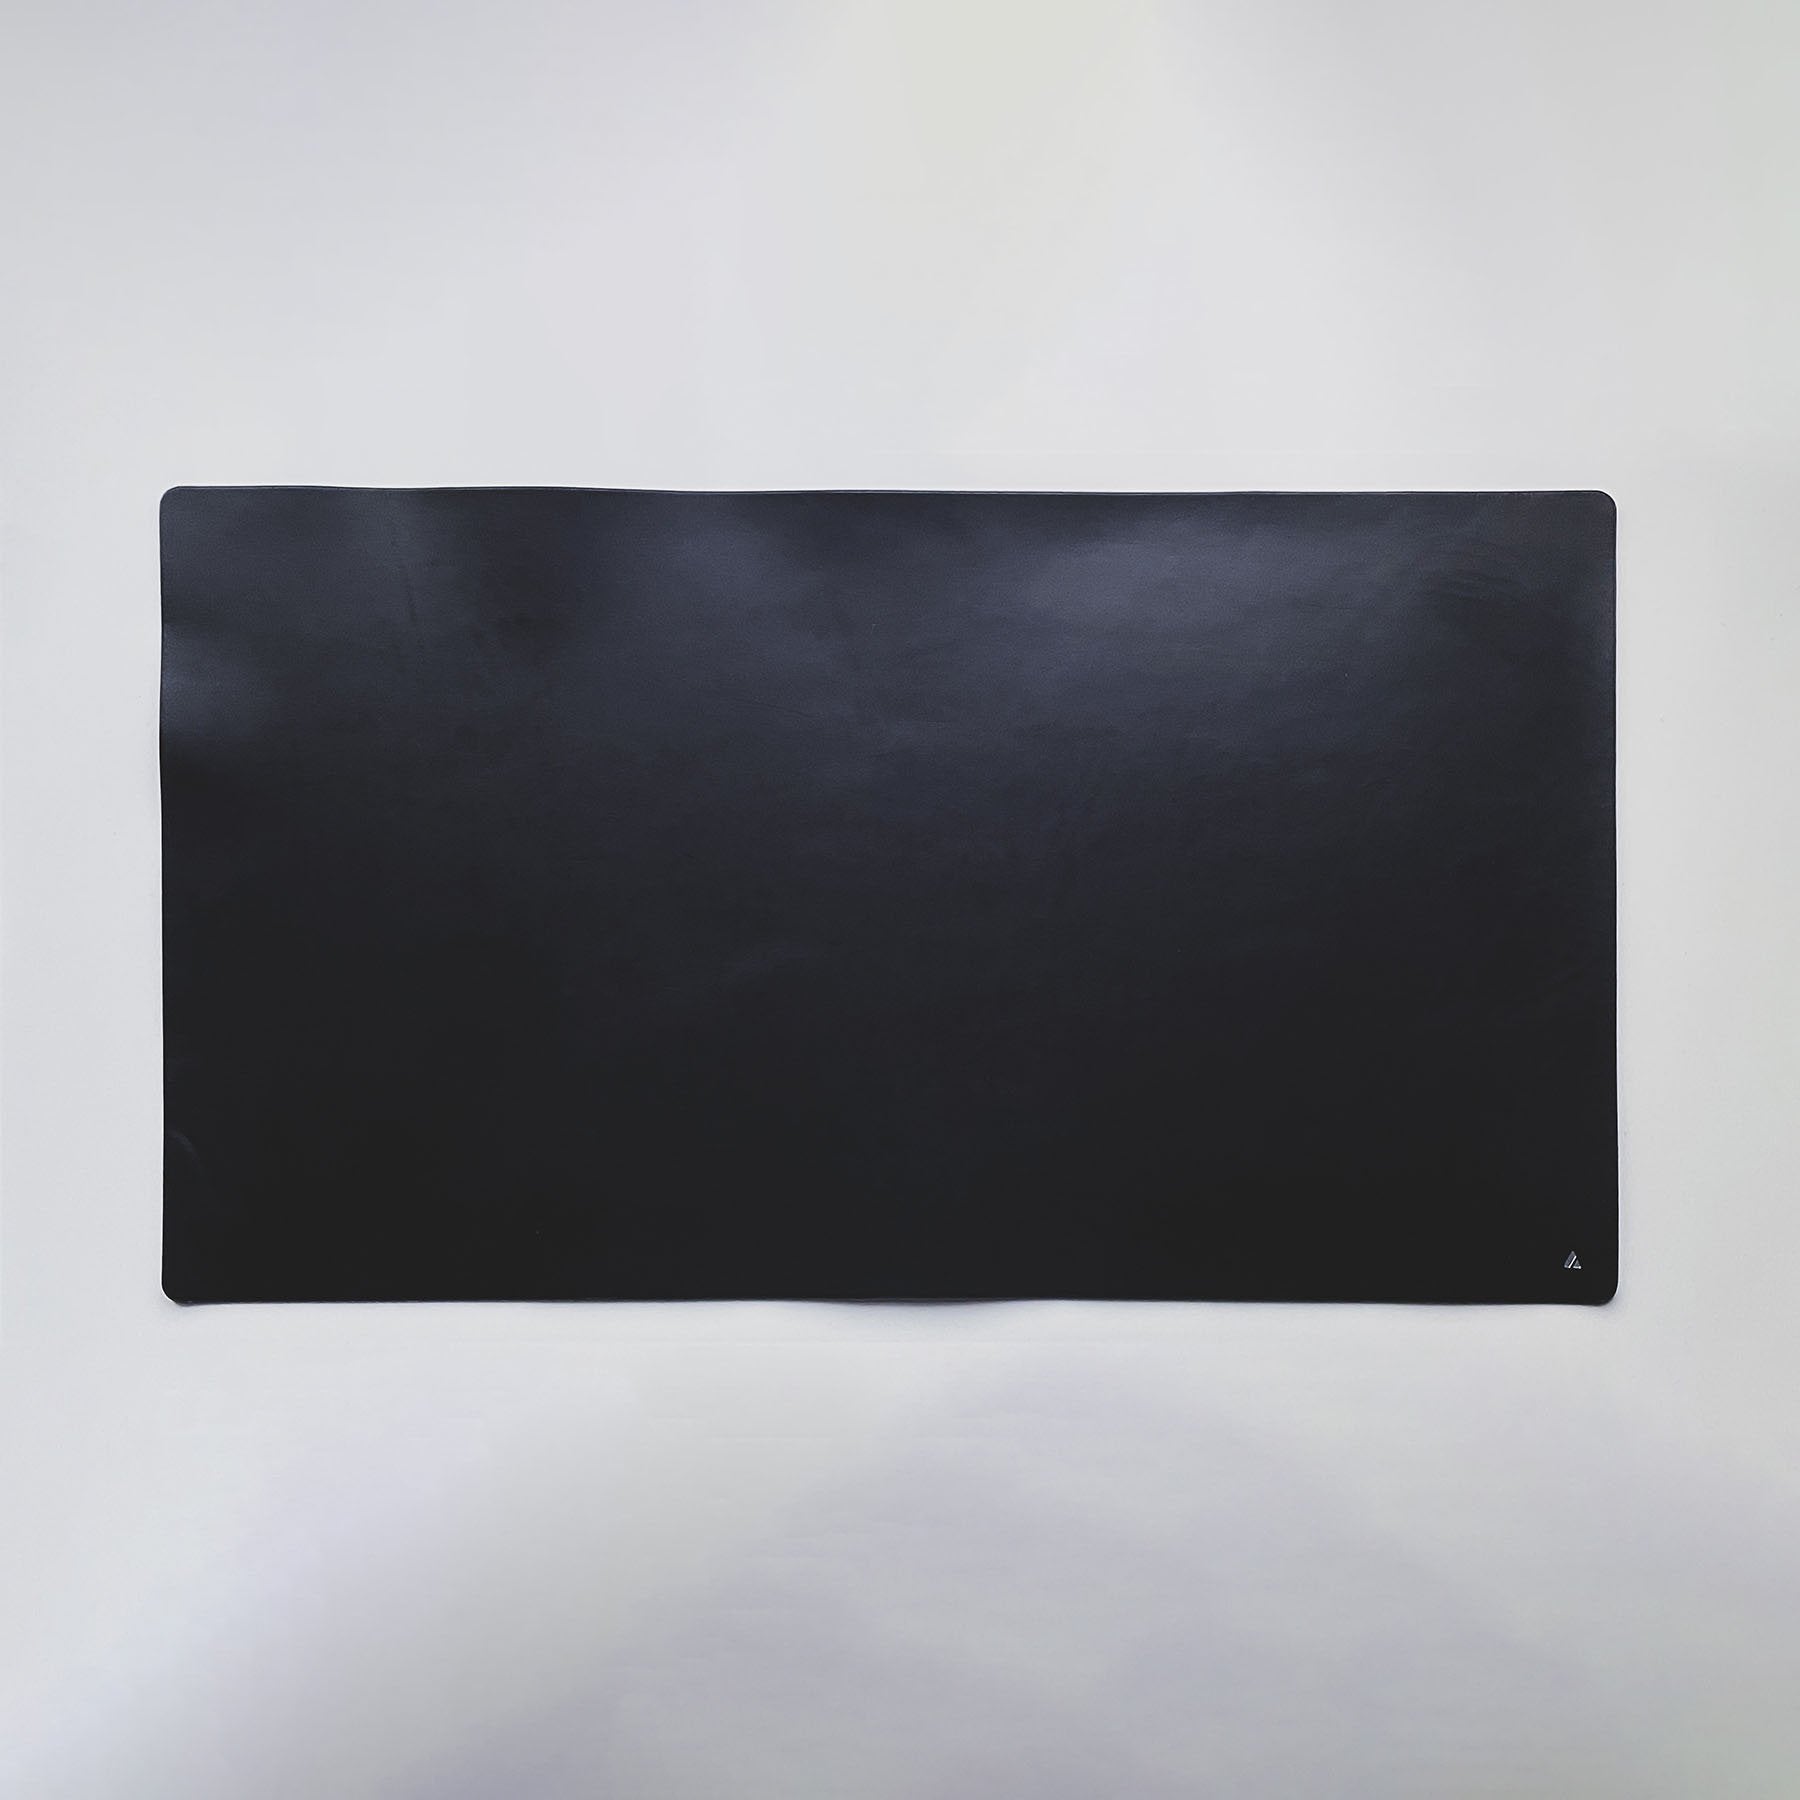 Rectangular Black PU Leather Desk Pad, Size: 90x40 Cm at Rs 699